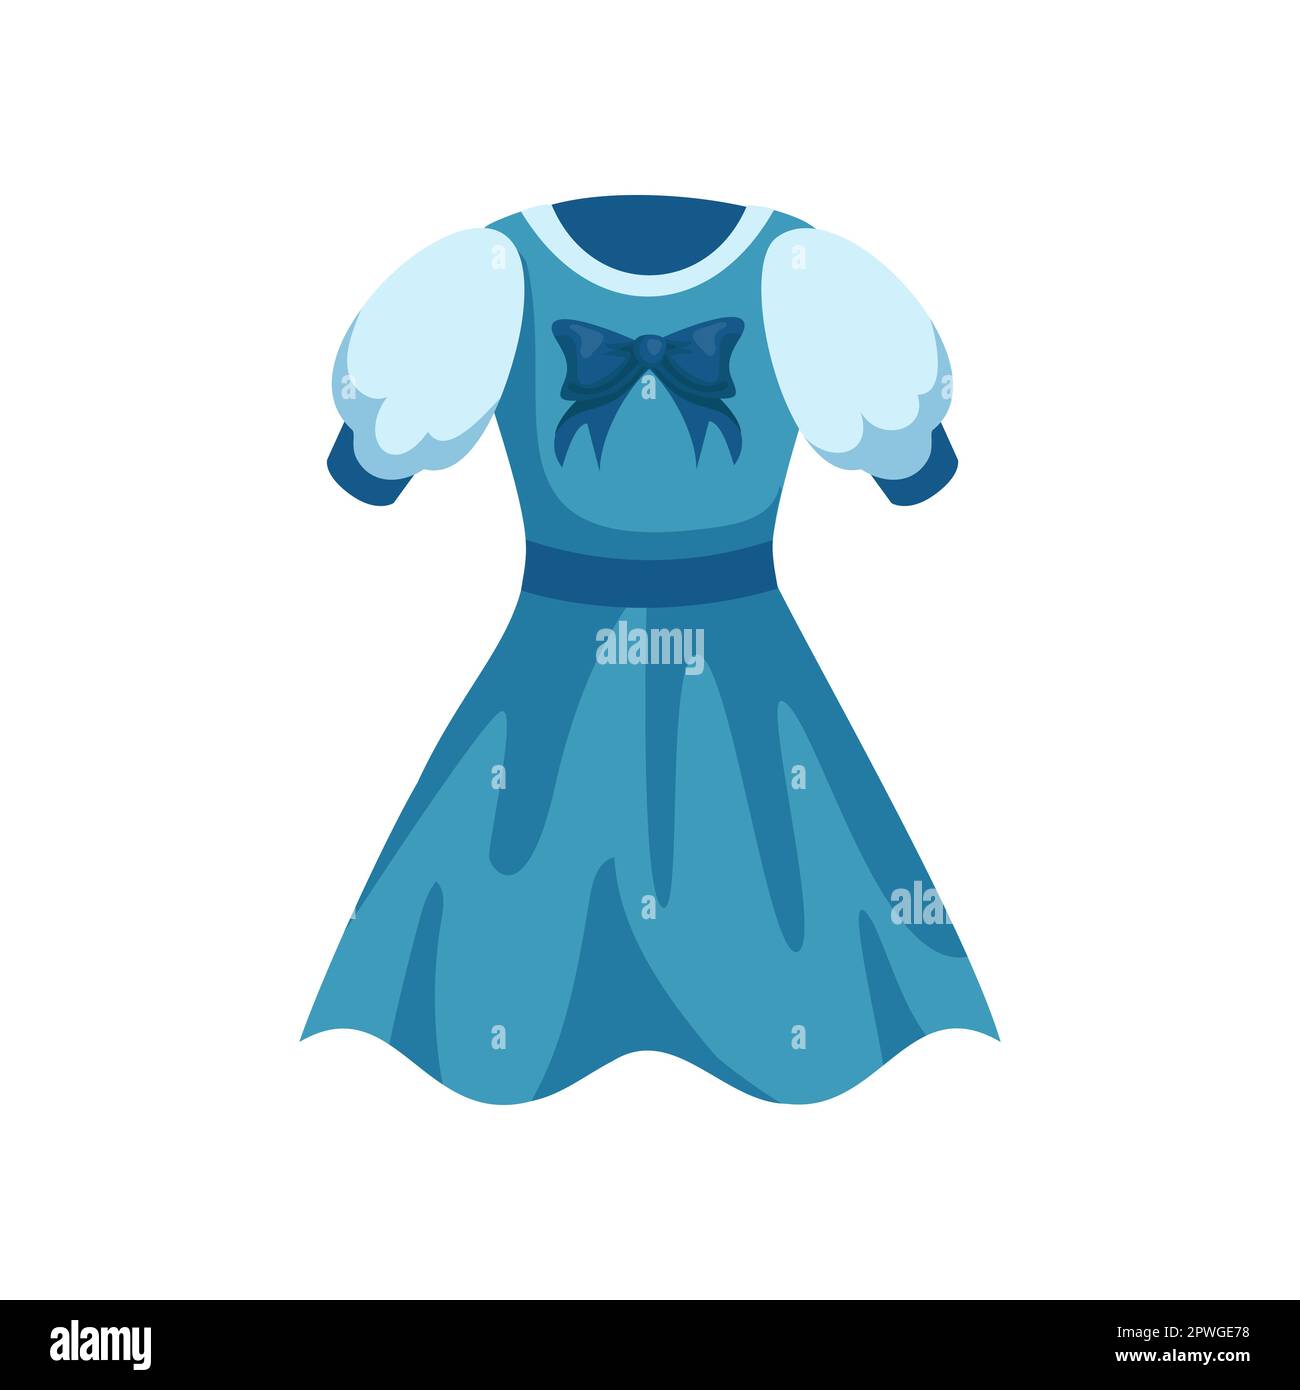 Blue dress for girls and kids cartoon illustration Stock Vector